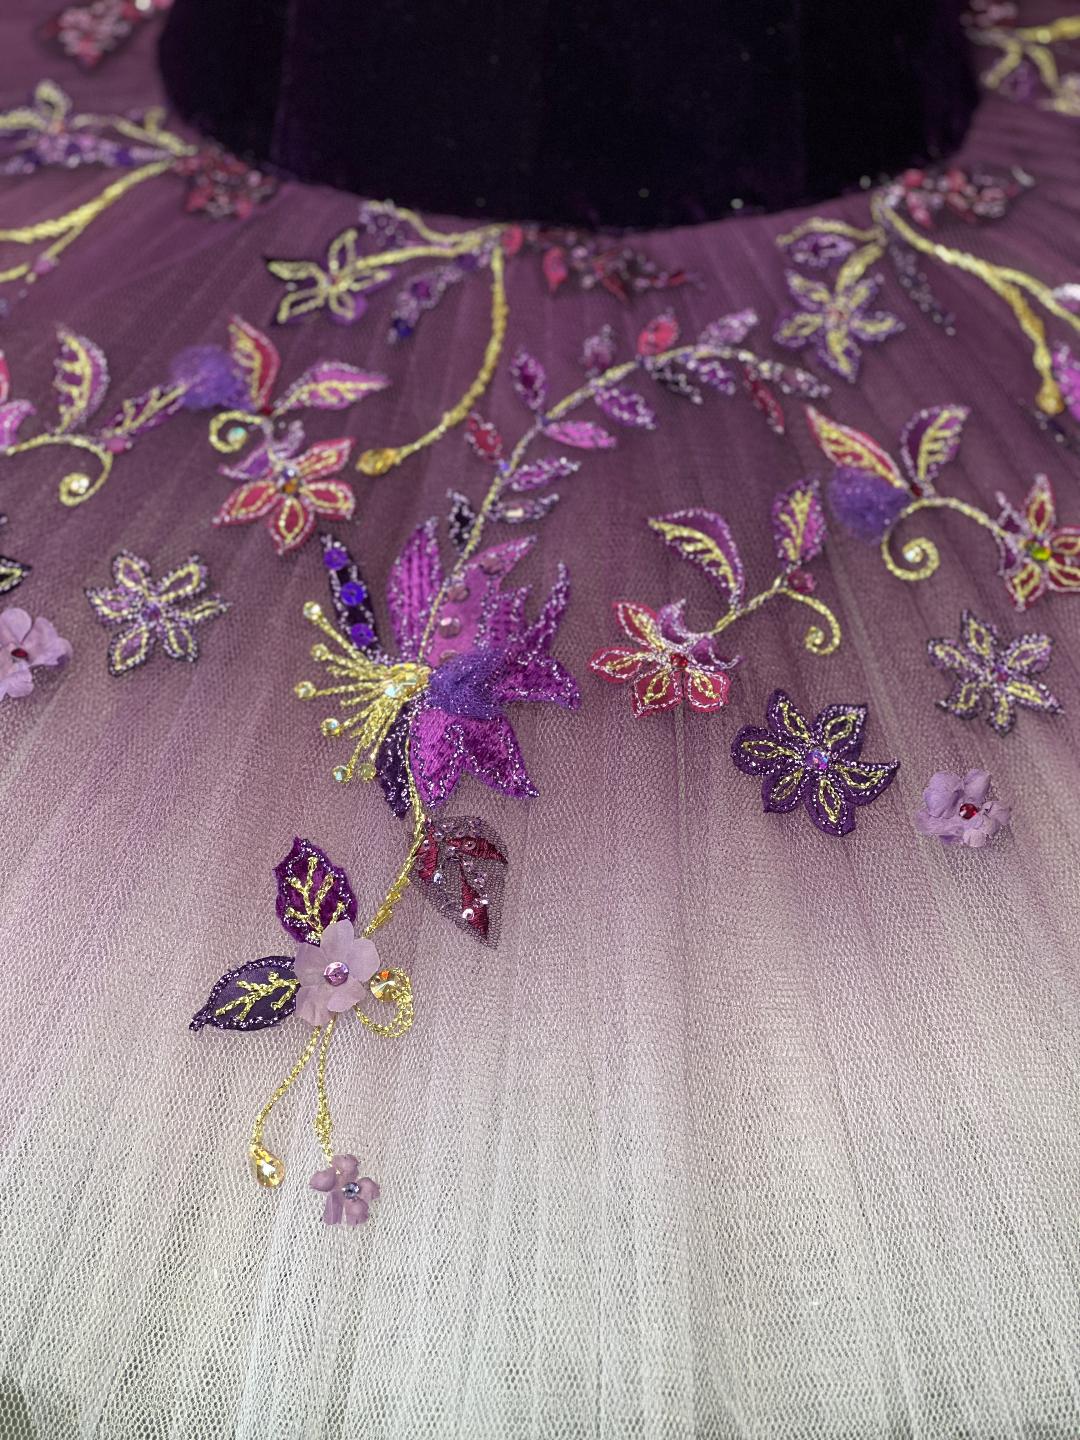 Lilac Fairy Variation - Giselle Tutus